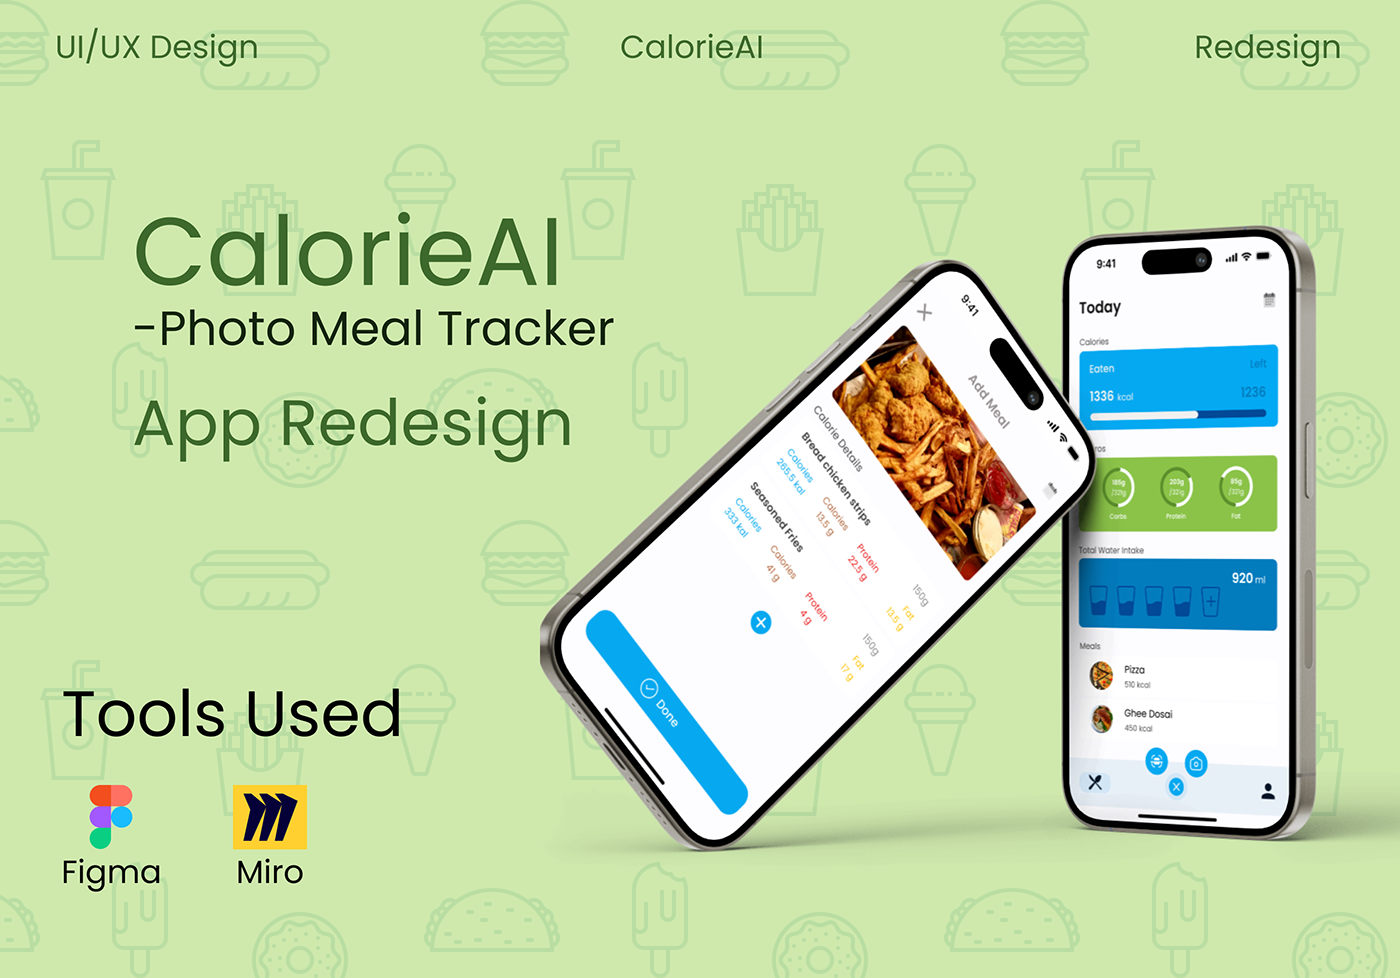 calorie tracking redesign uiux uxdesign uidesign Figma user experience AppRedesign CalorieAI calorietracker